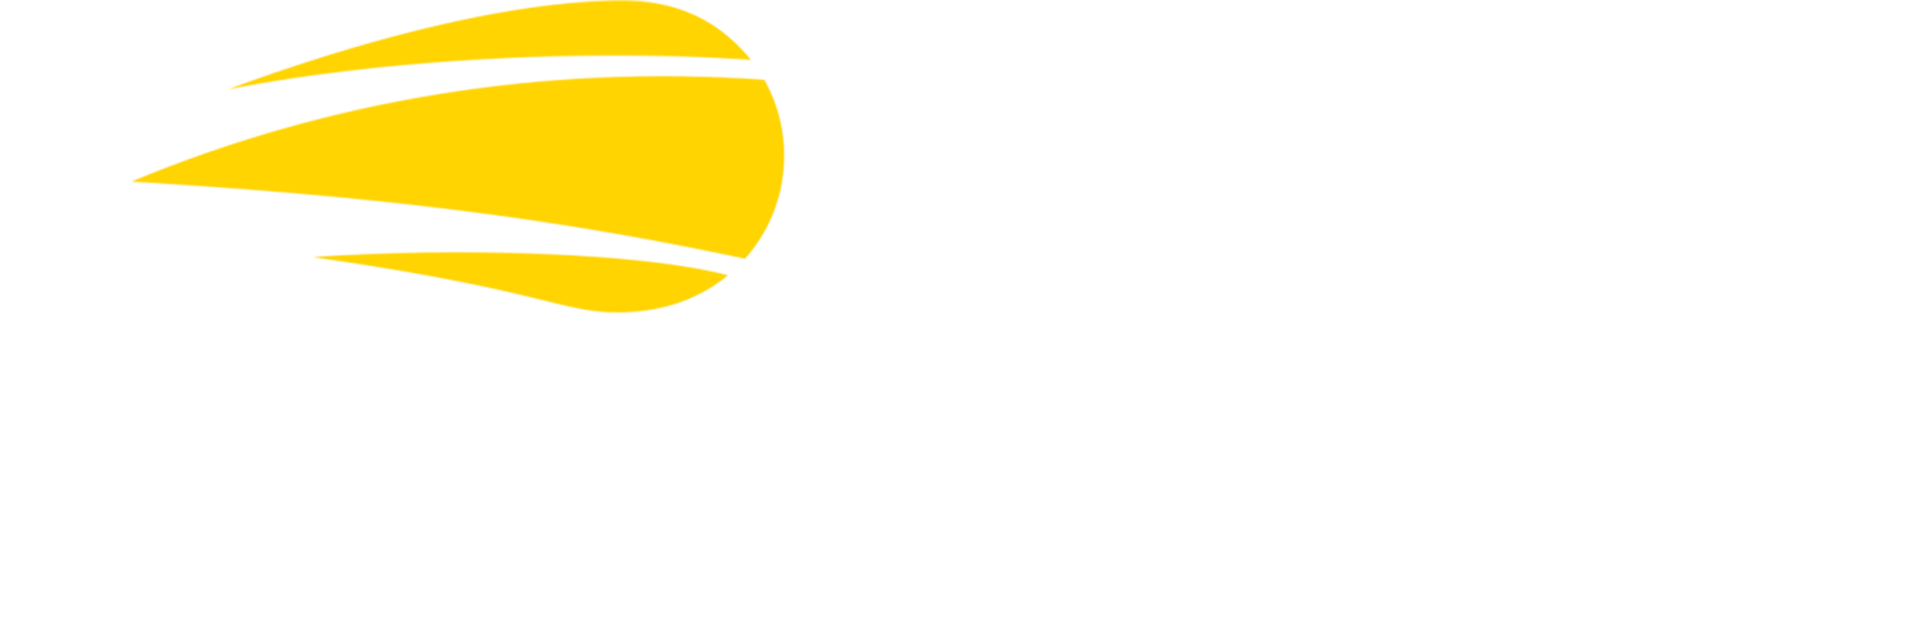 us open tennis logo png